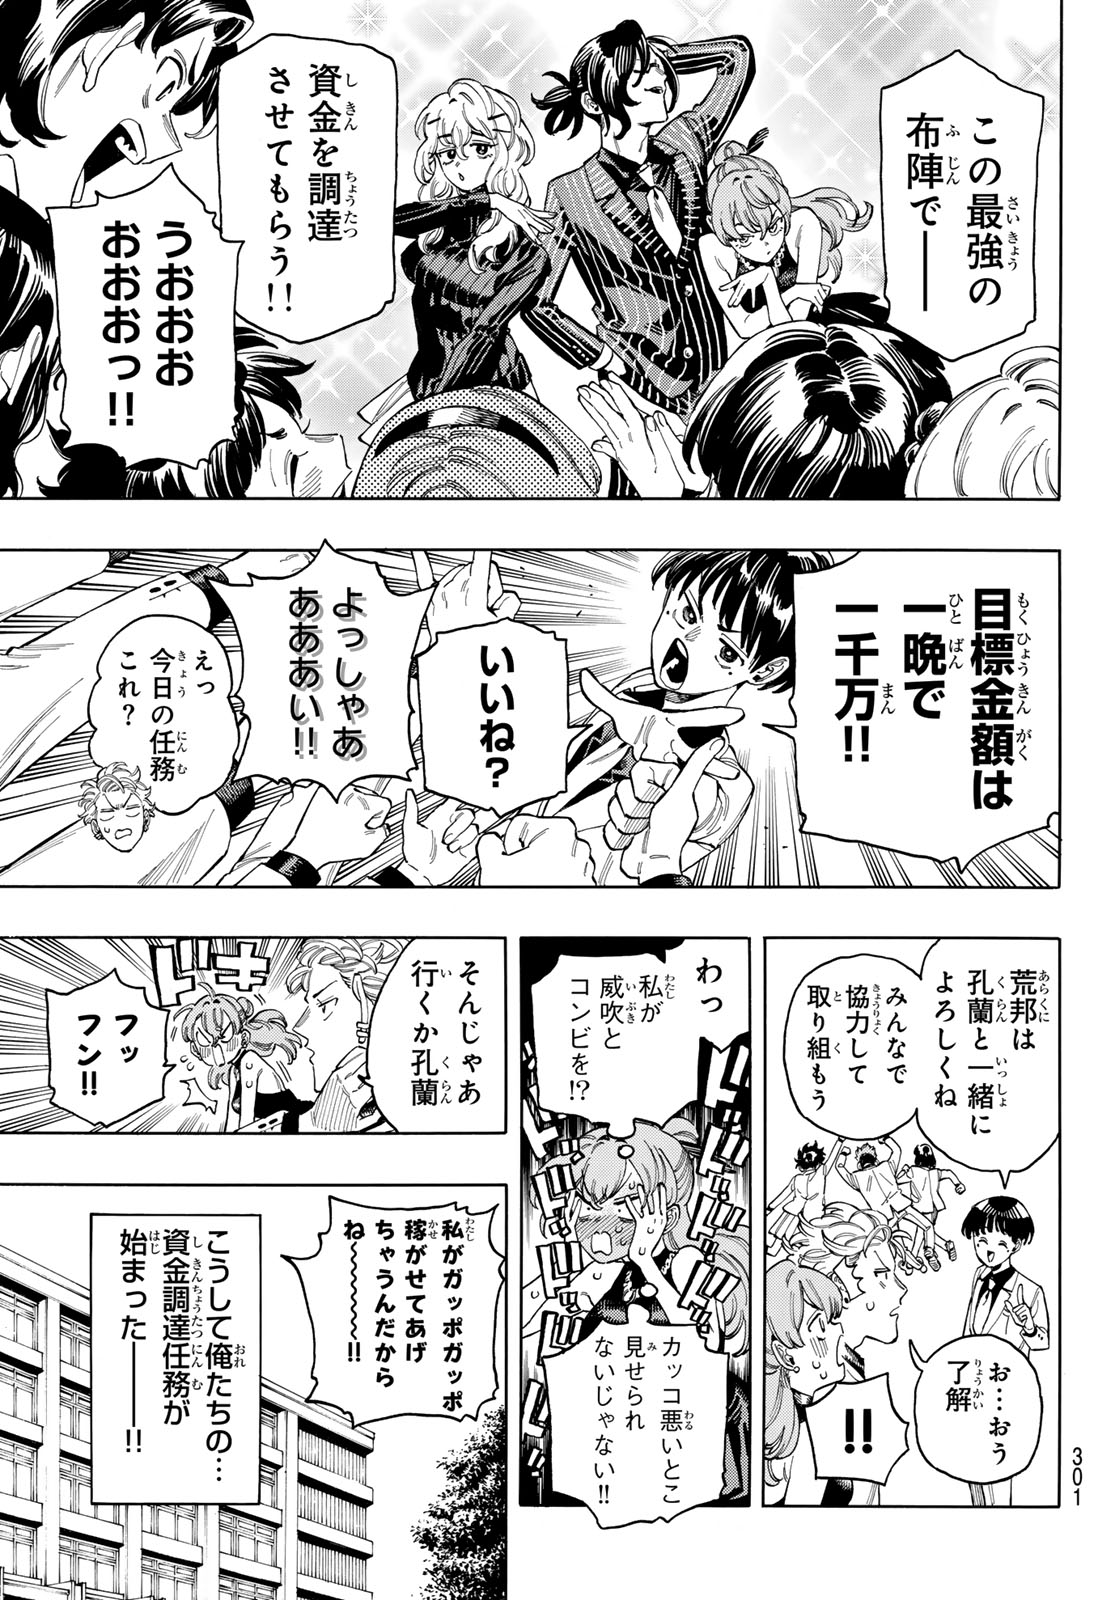 Akabane Honeko no Bodyguard - Chapter 82 - Page 5